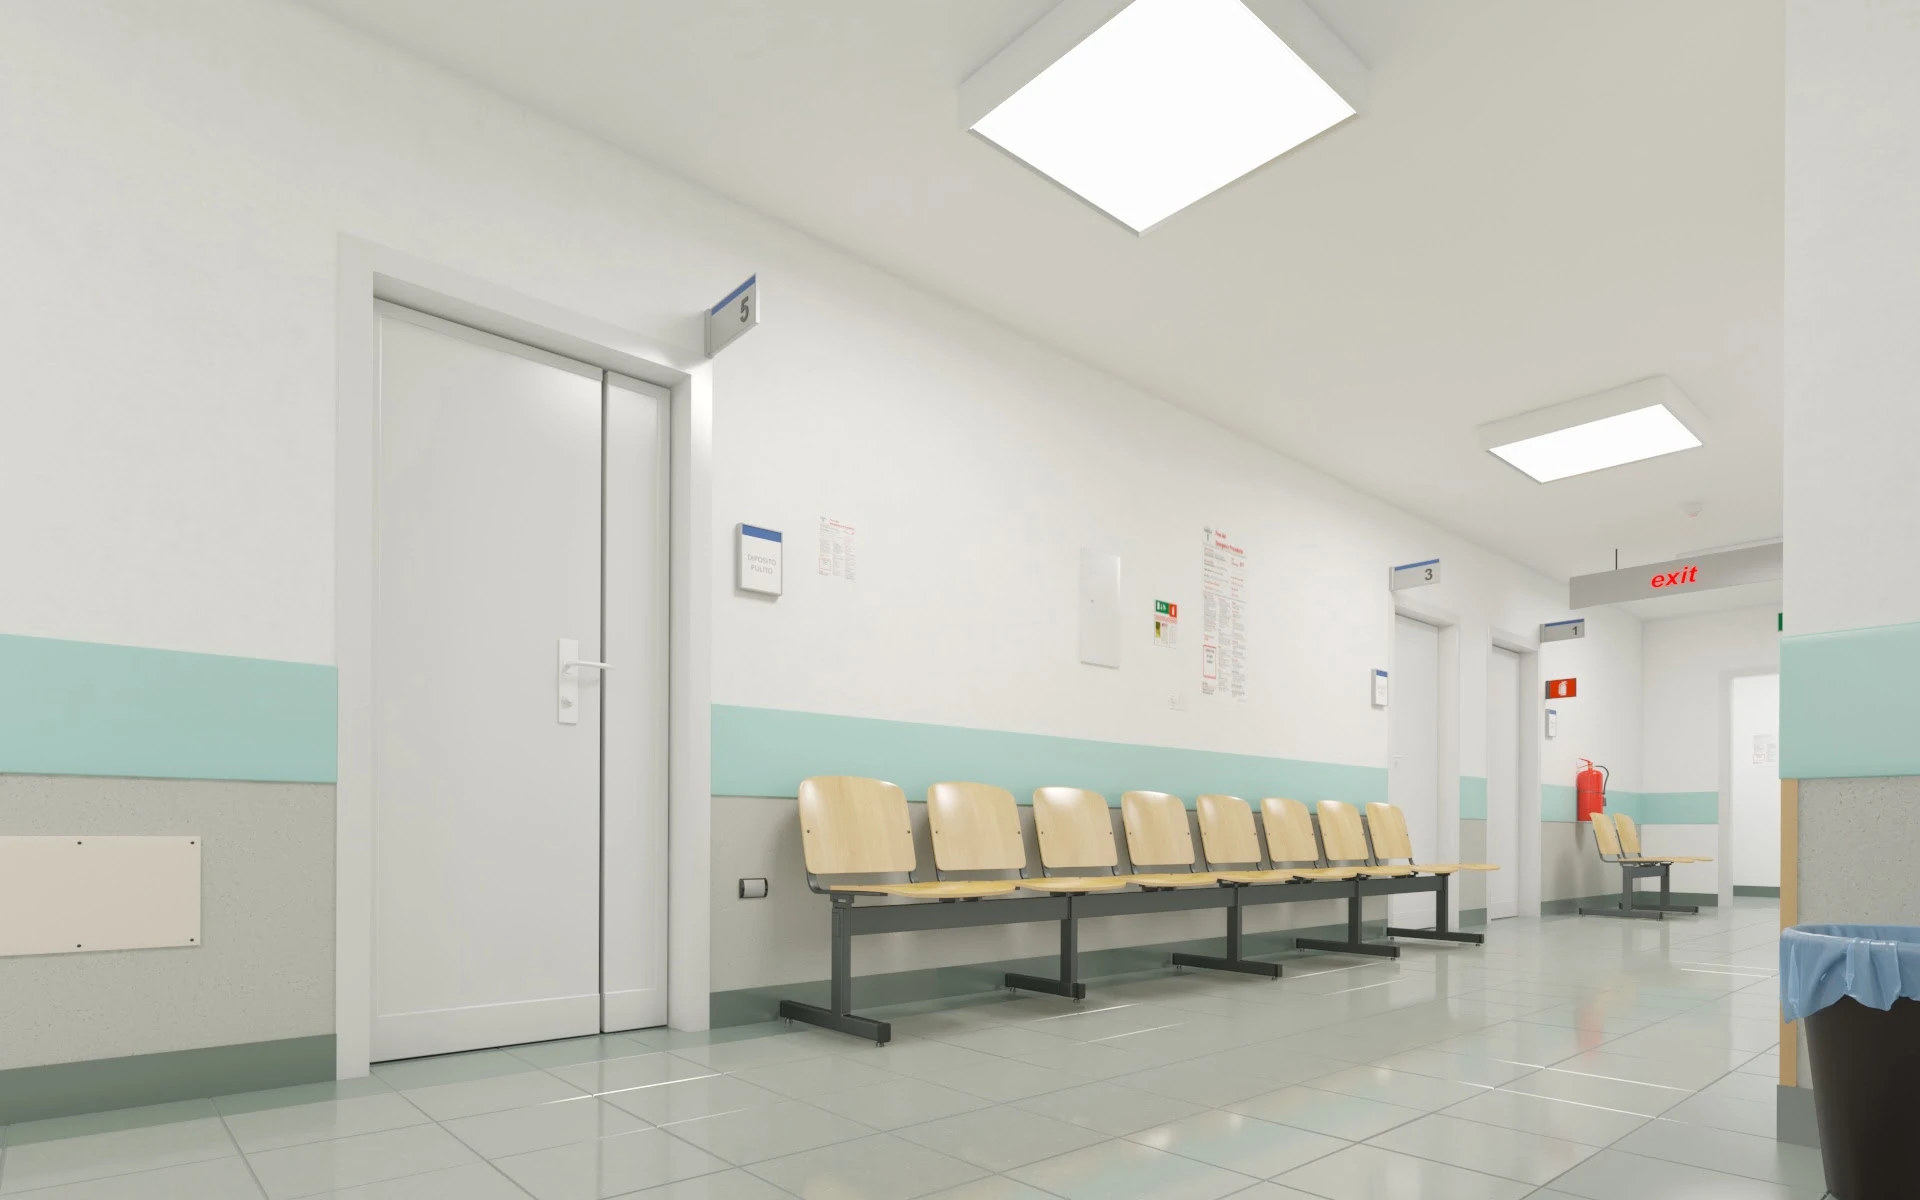 019 Hospital Hallway Corridor 3D Model_08